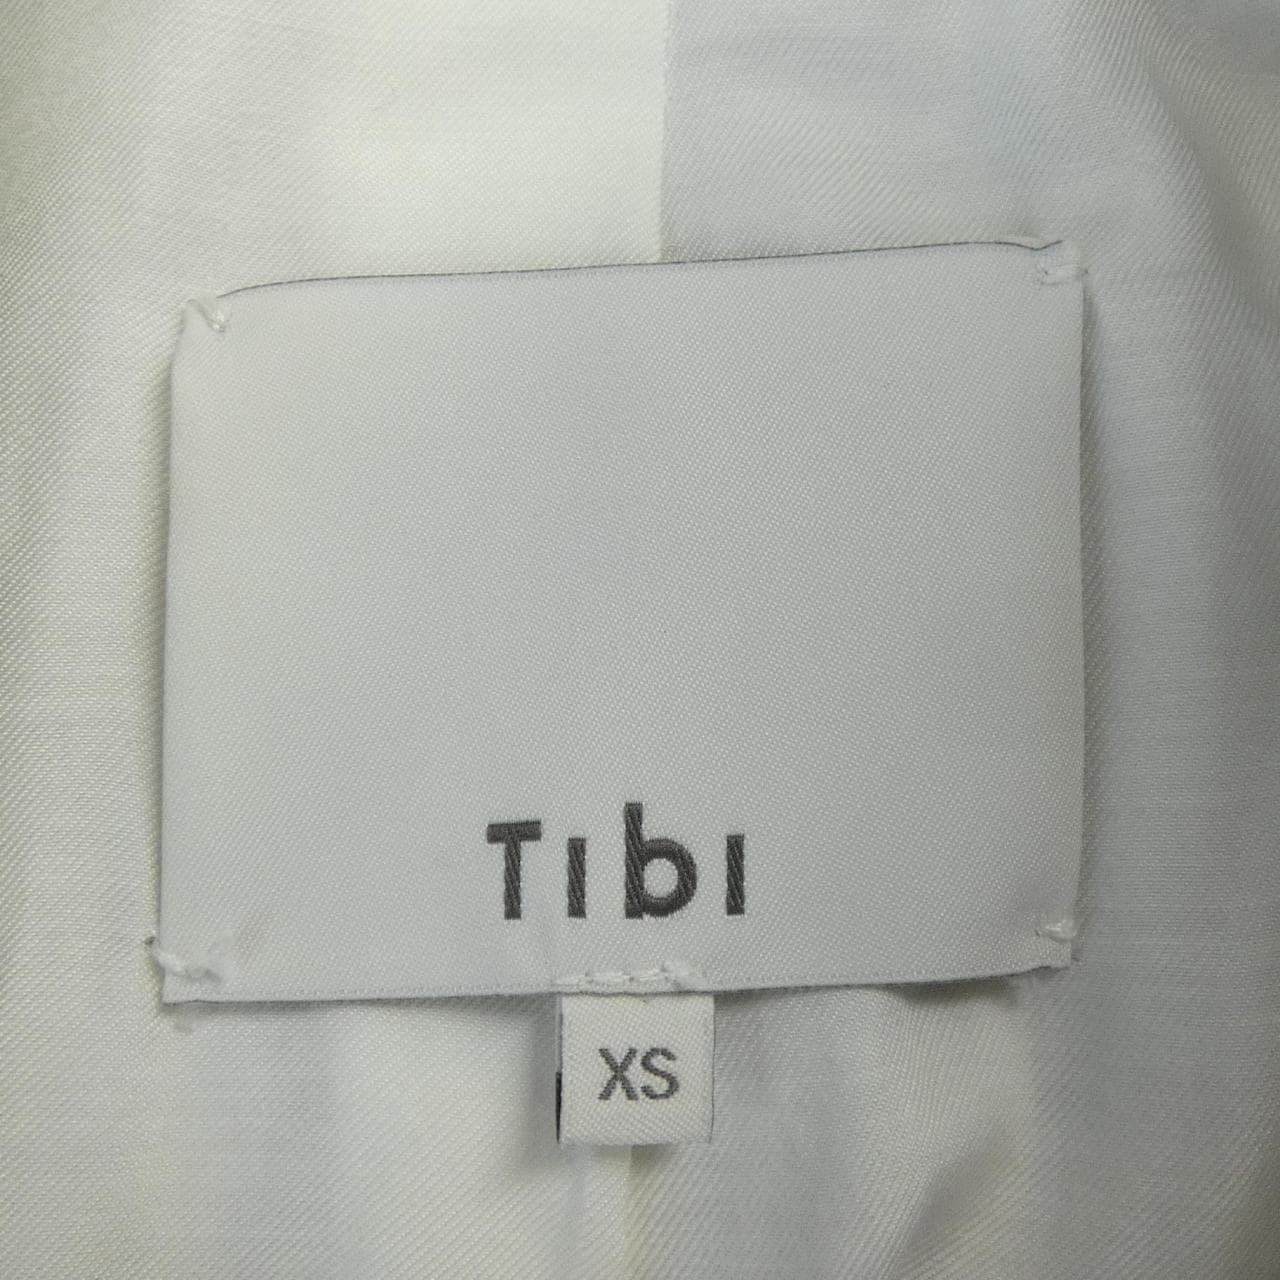 TIBI jacket